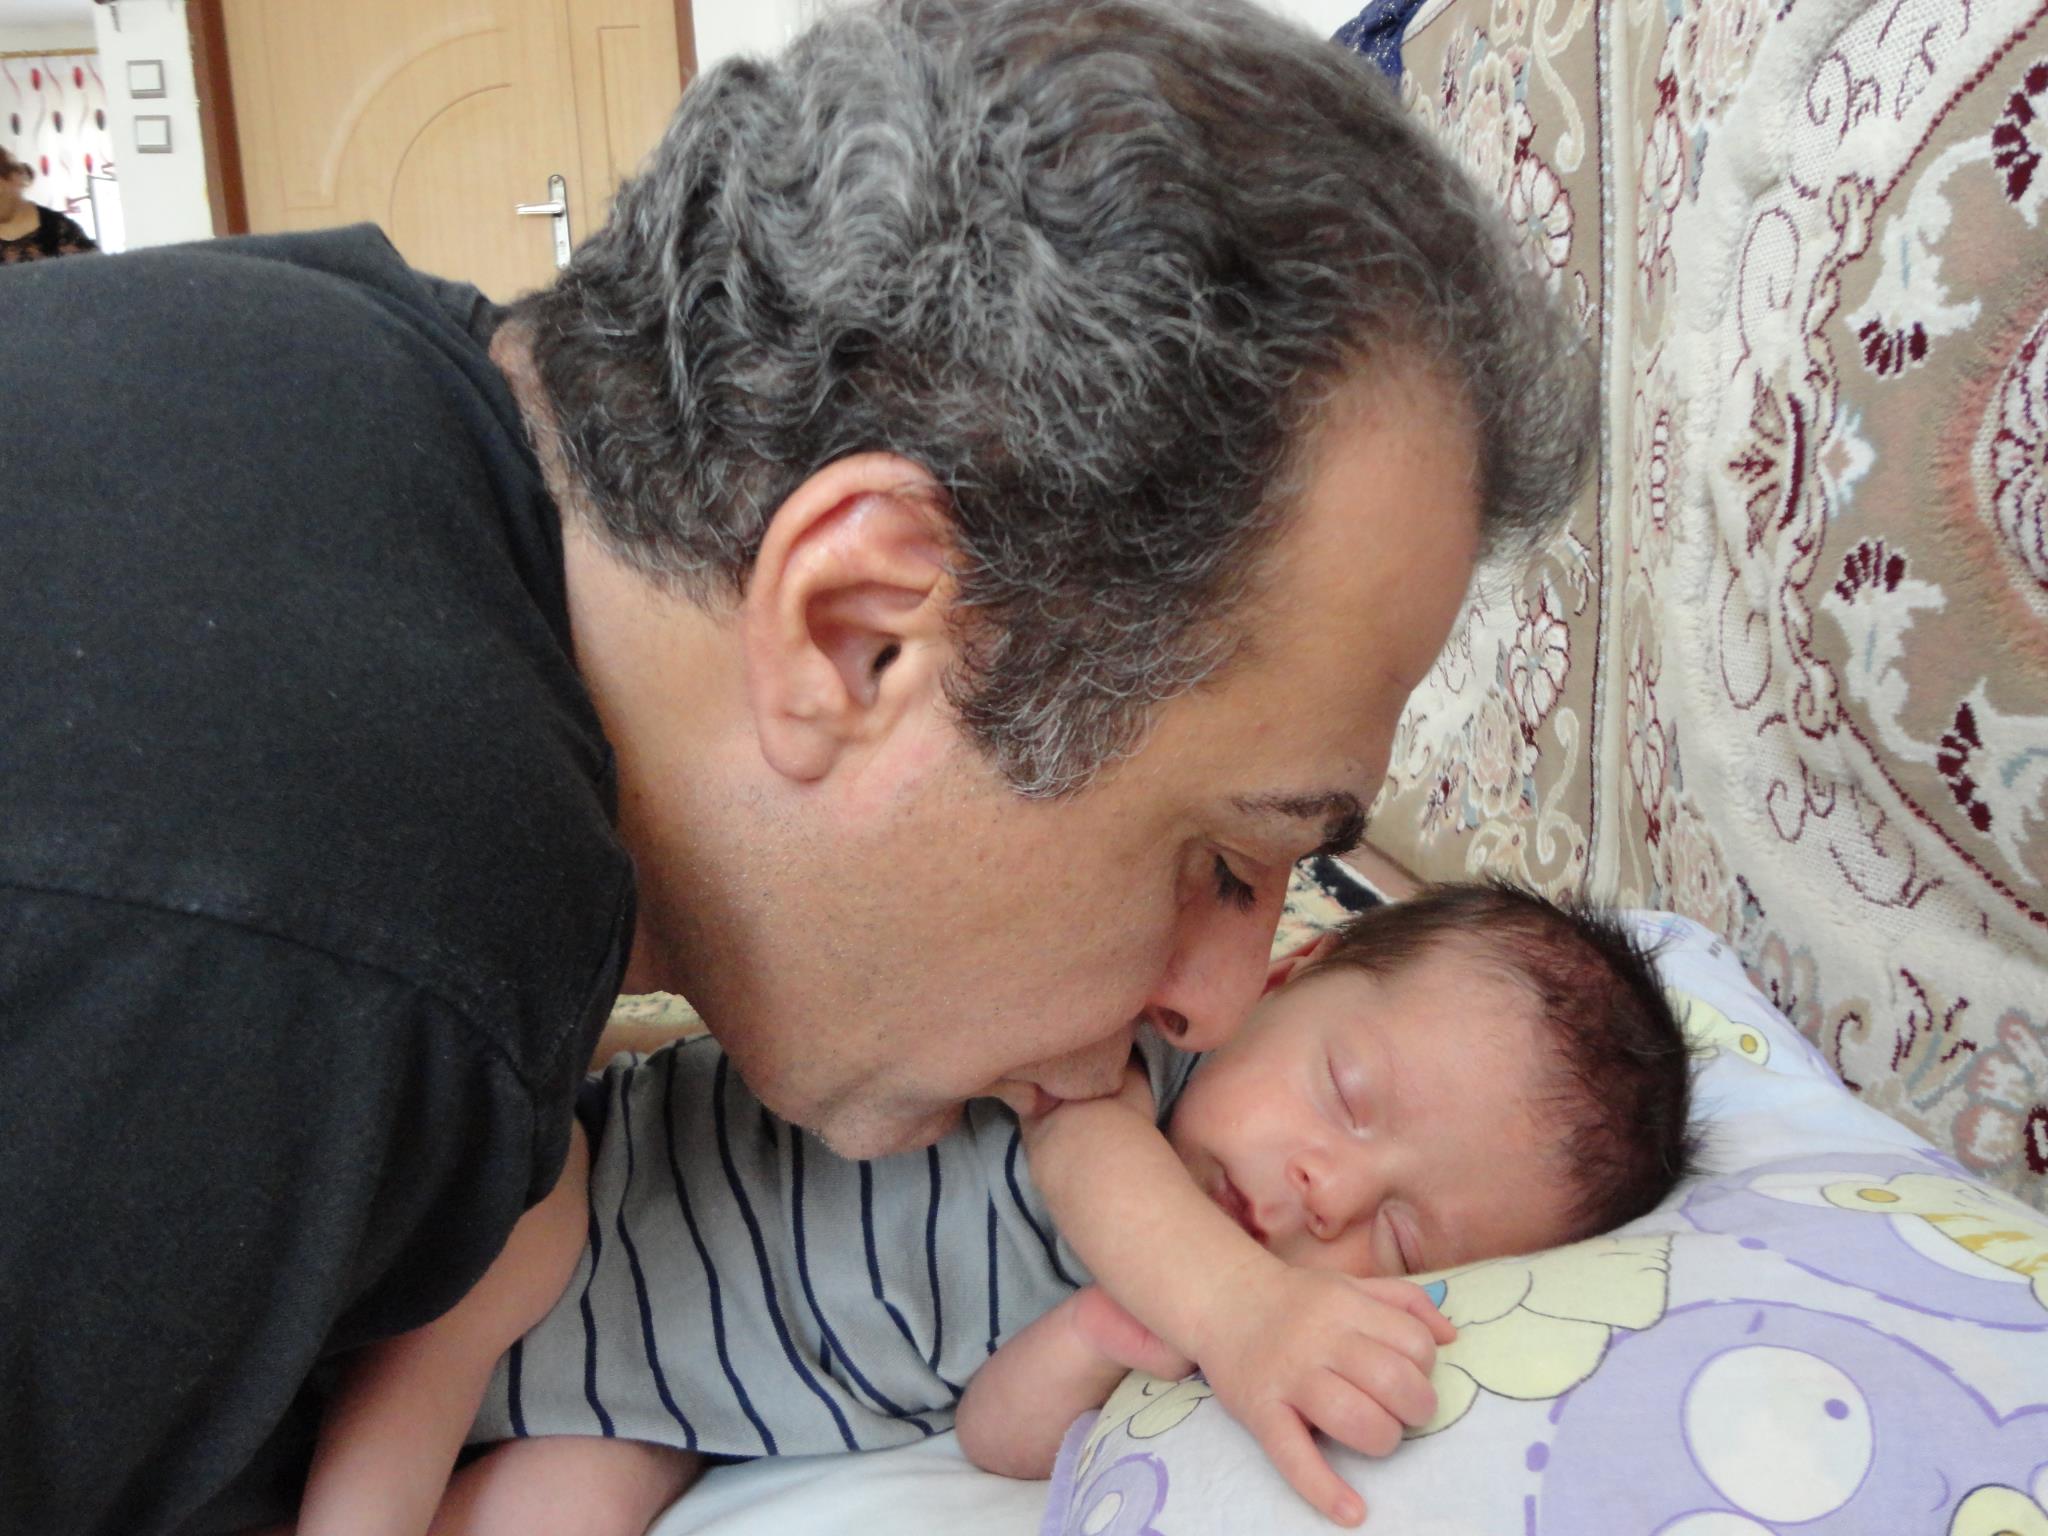 Behrouz with his newborn son, Harmang